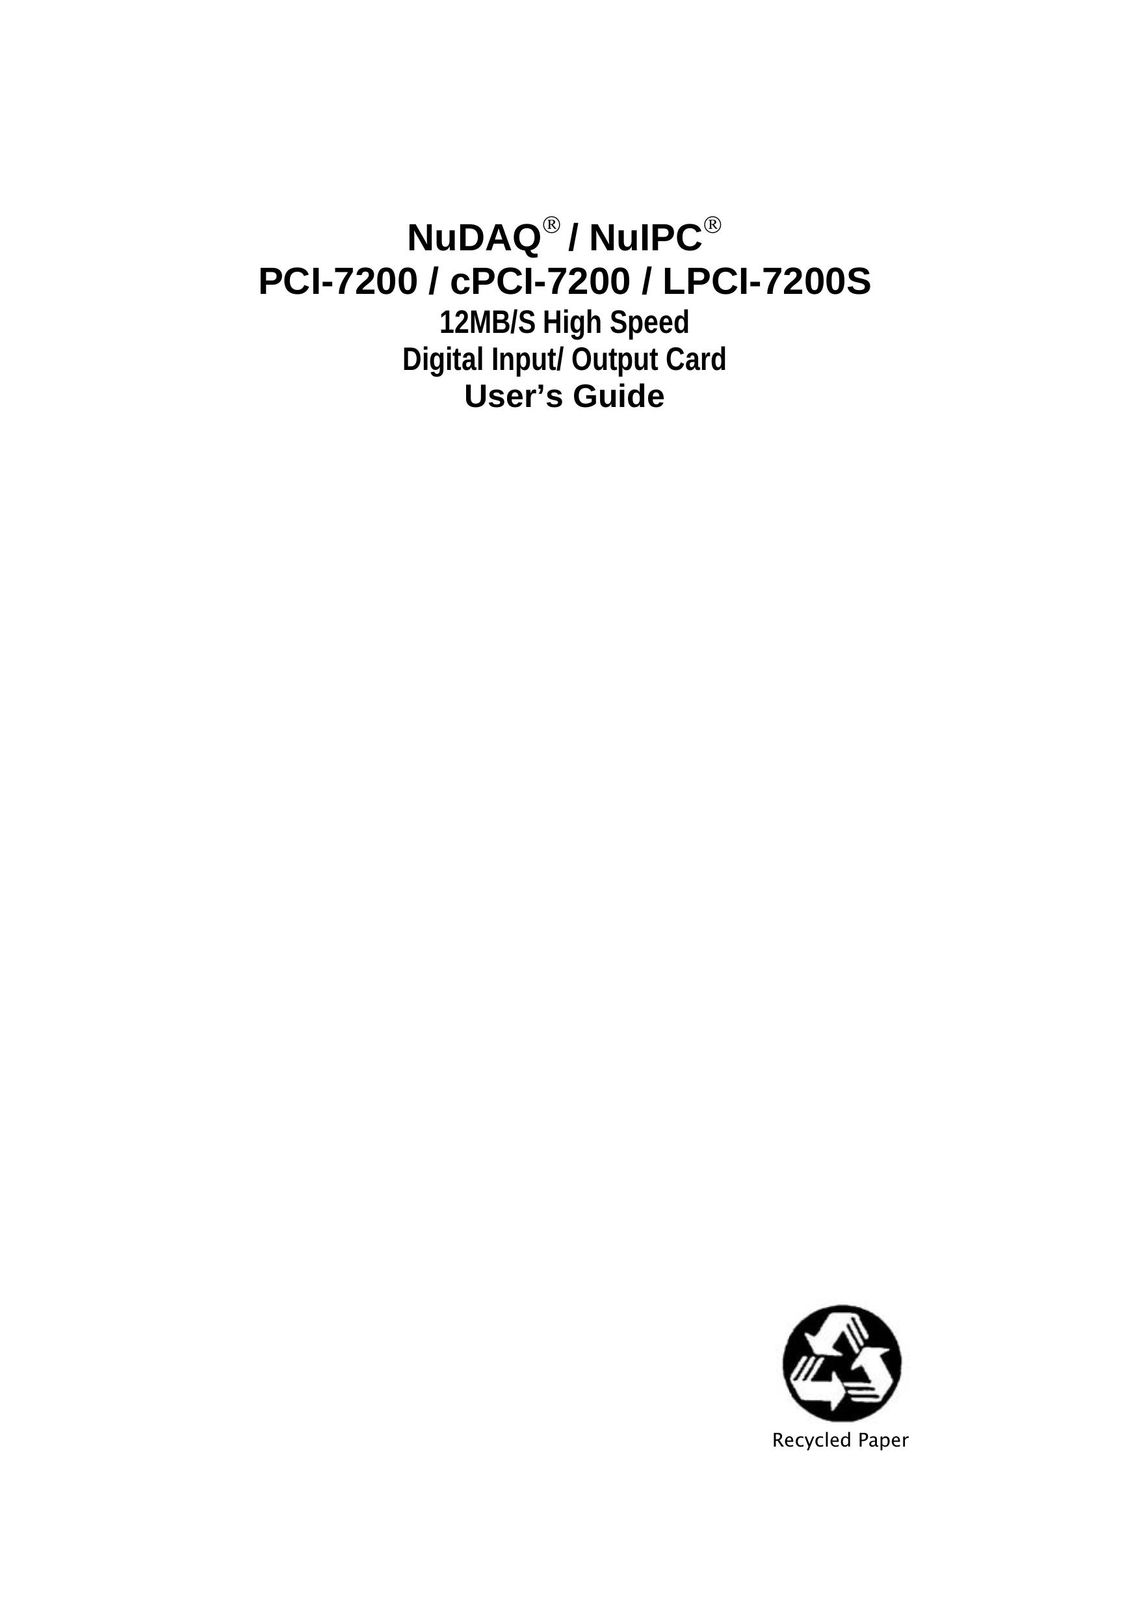 Intel LPCI-7200S Network Card User Manual